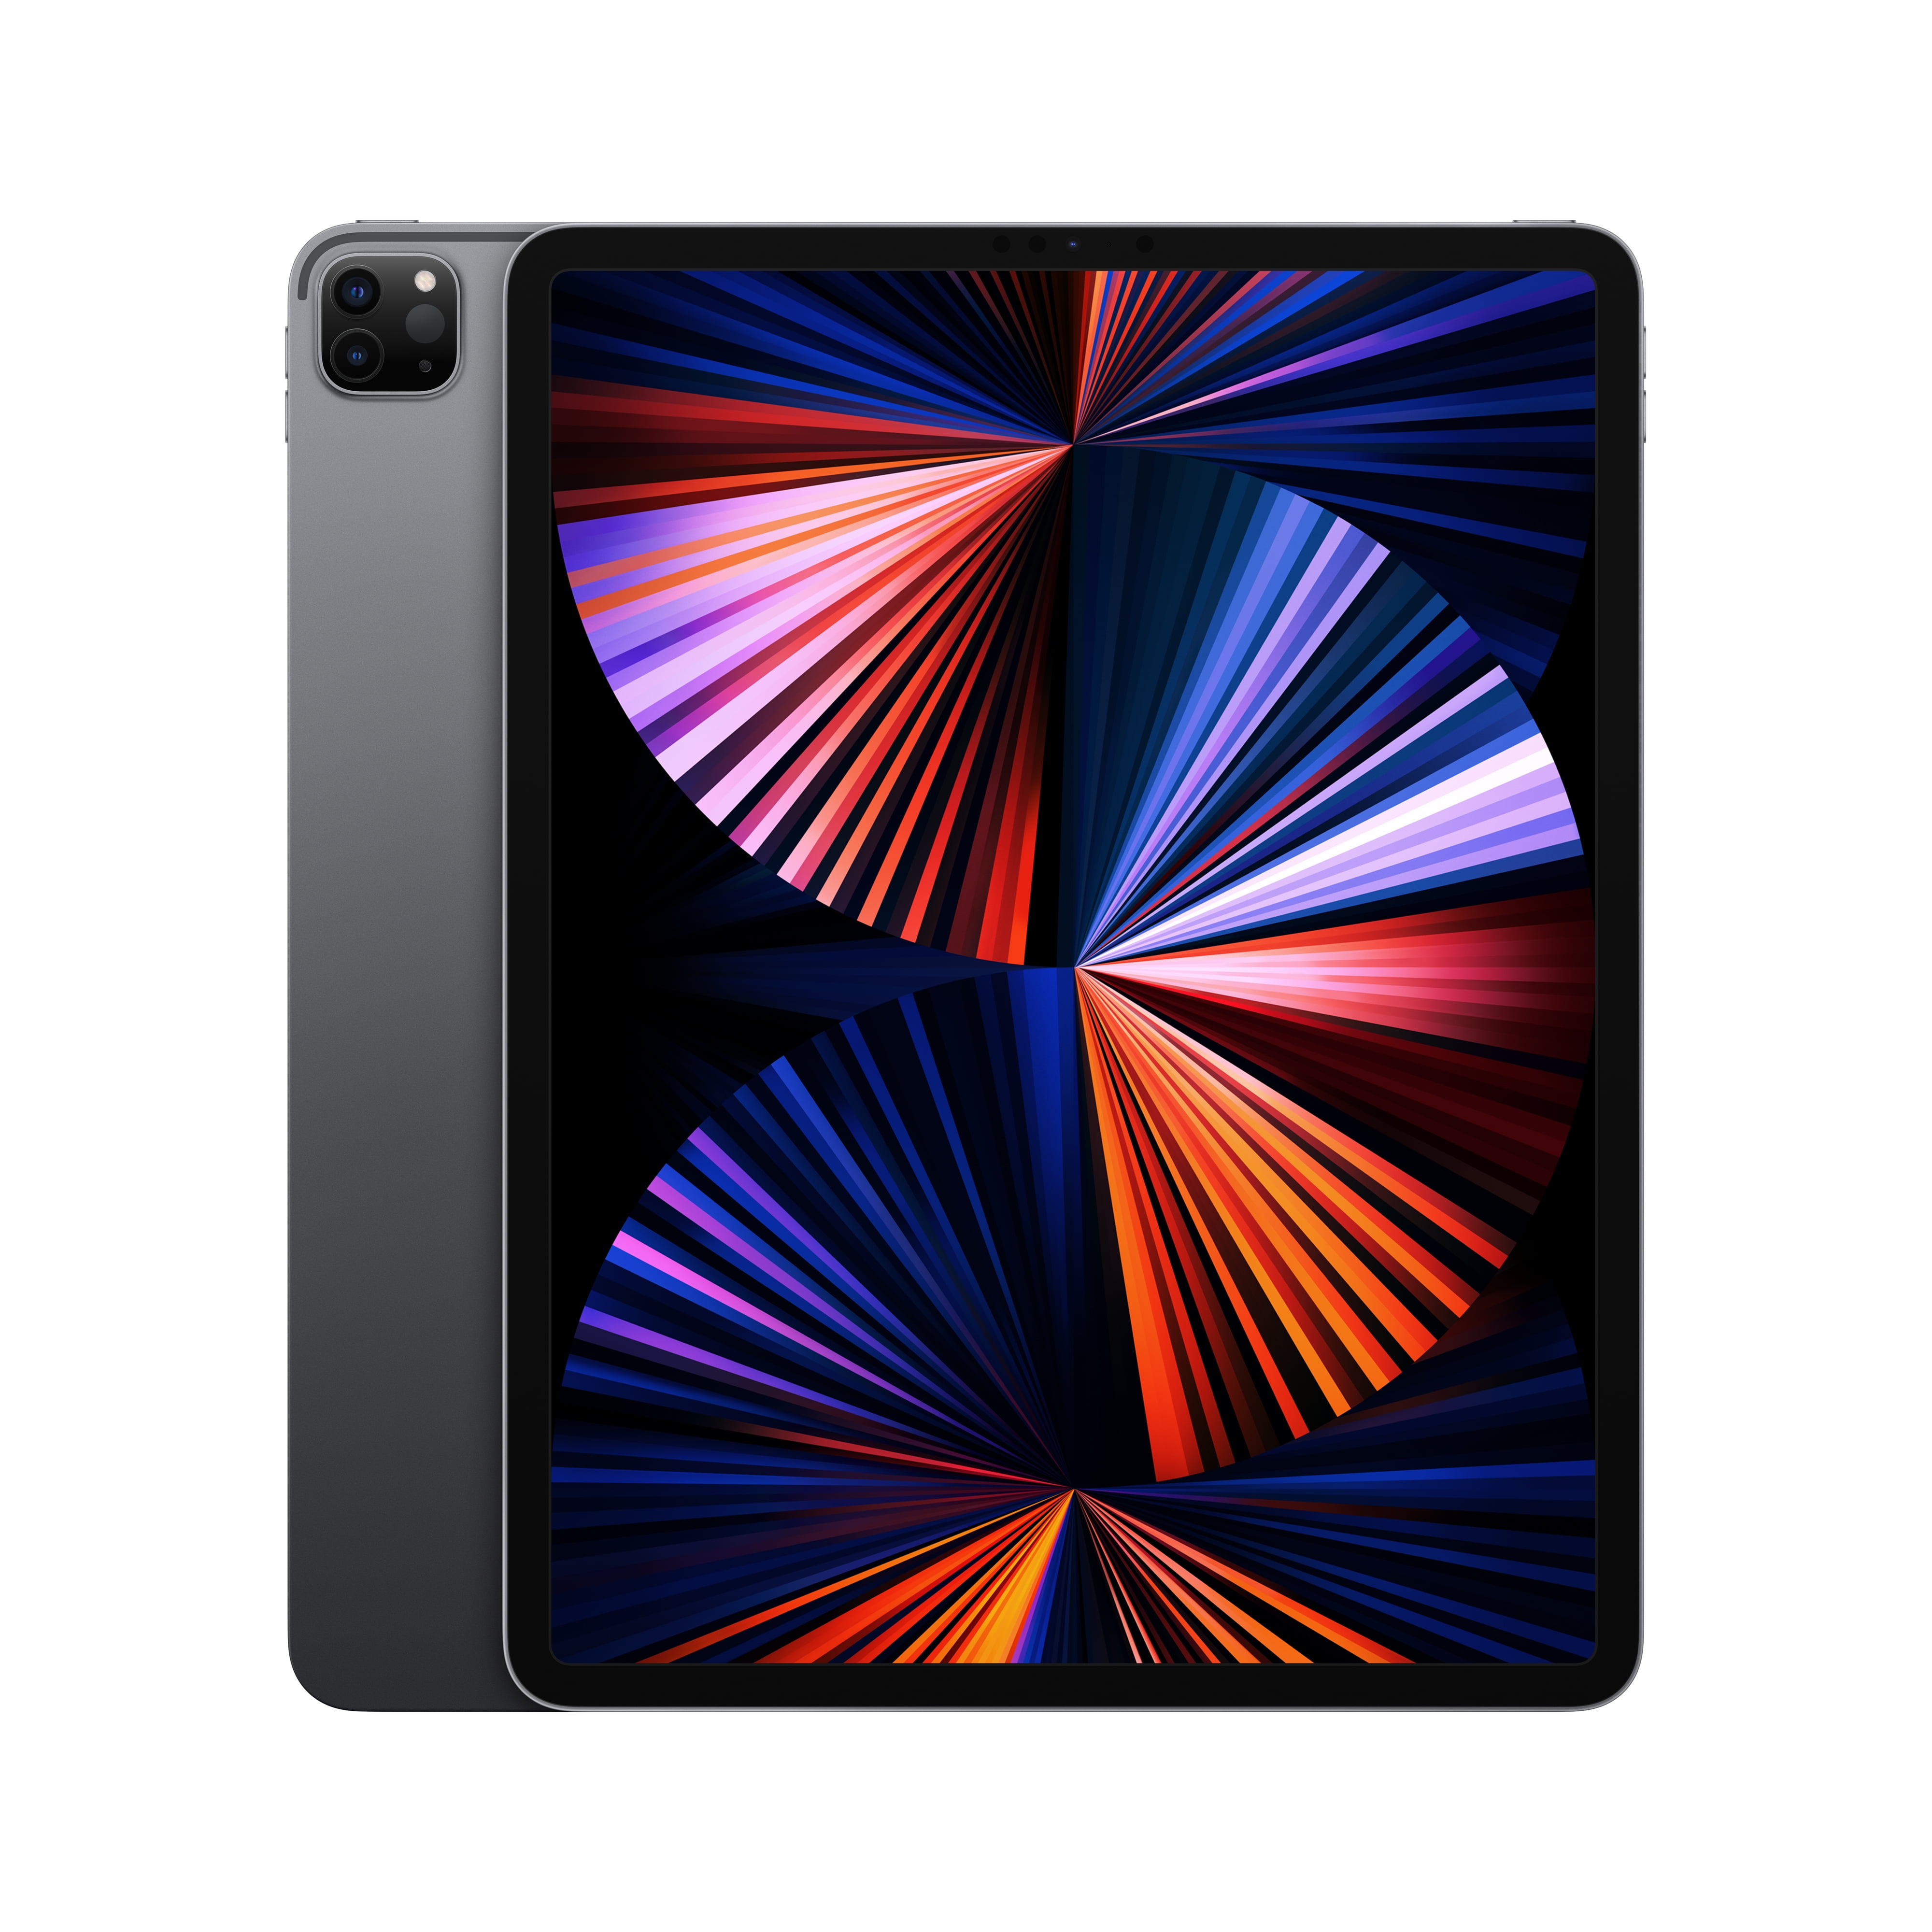 2021 Apple 12.9-inch iPad Pro Wi-Fi 256GB - Space Gray (5th Generation)